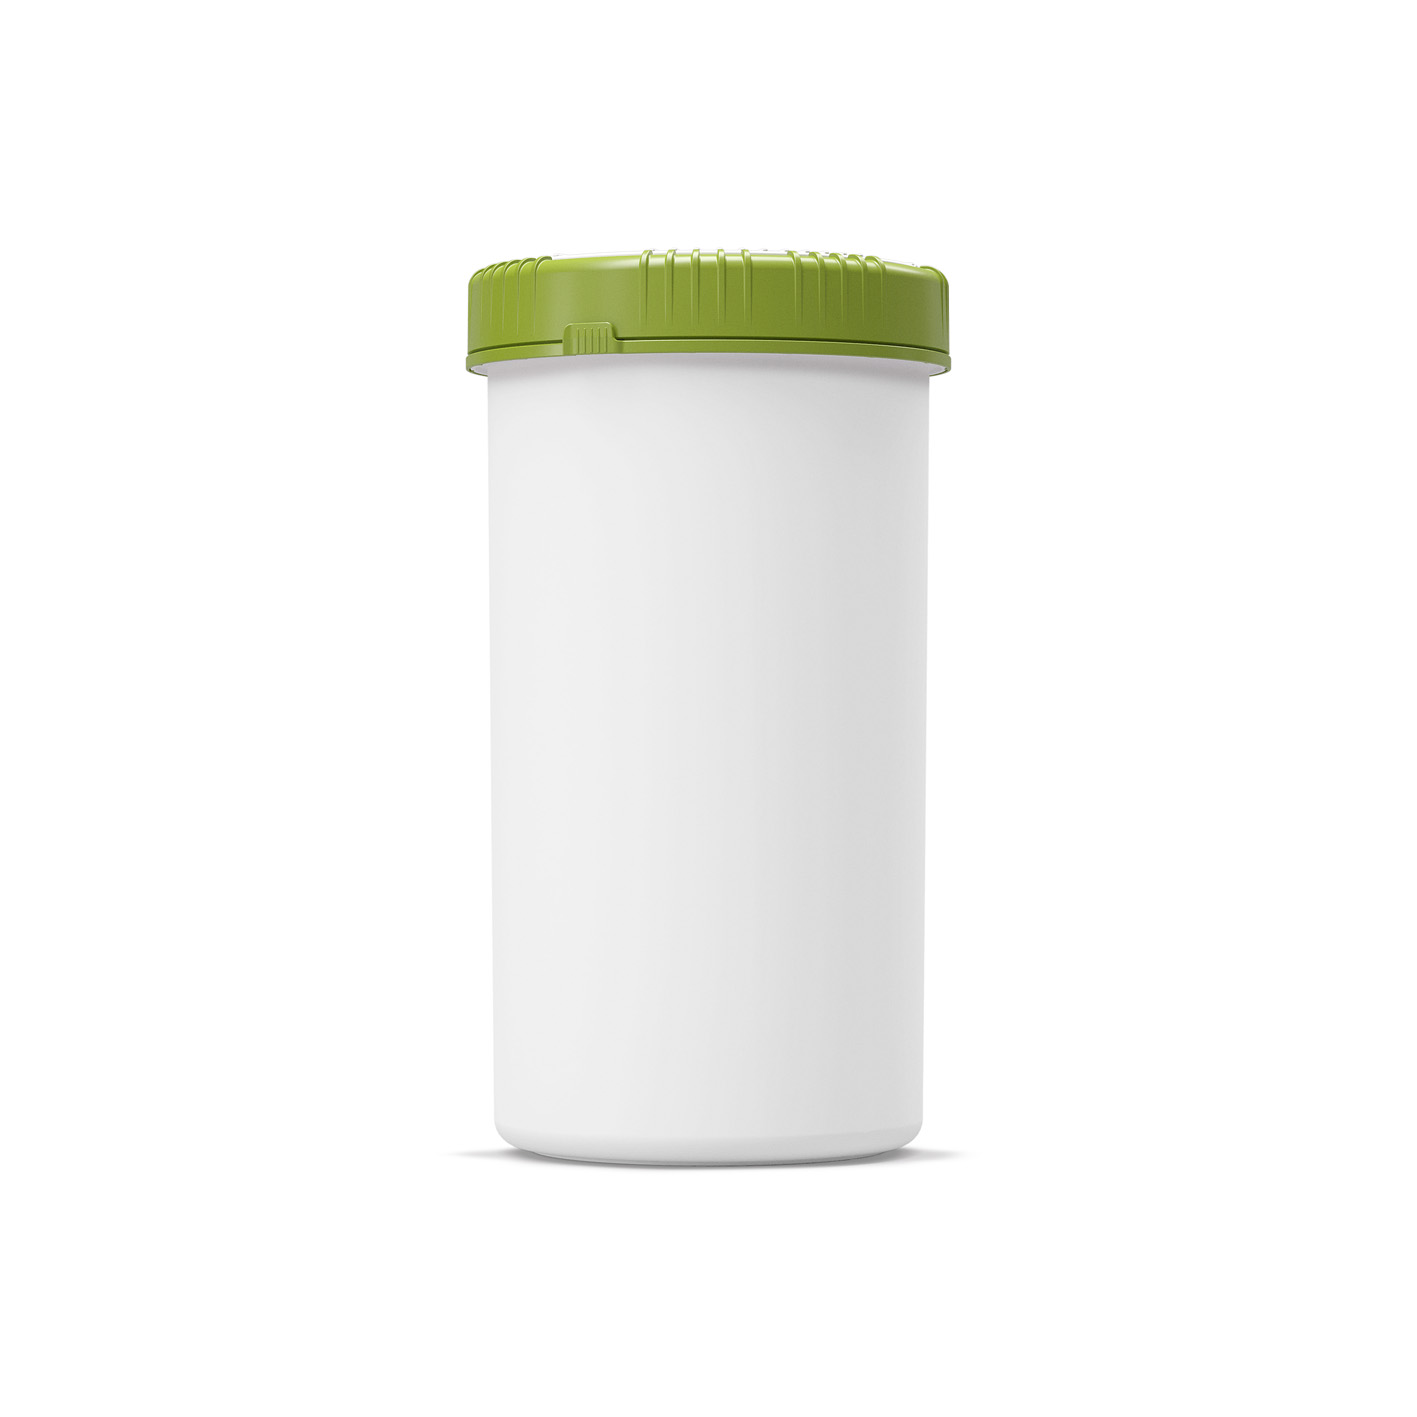 1300 ml Biobased Packo Jar